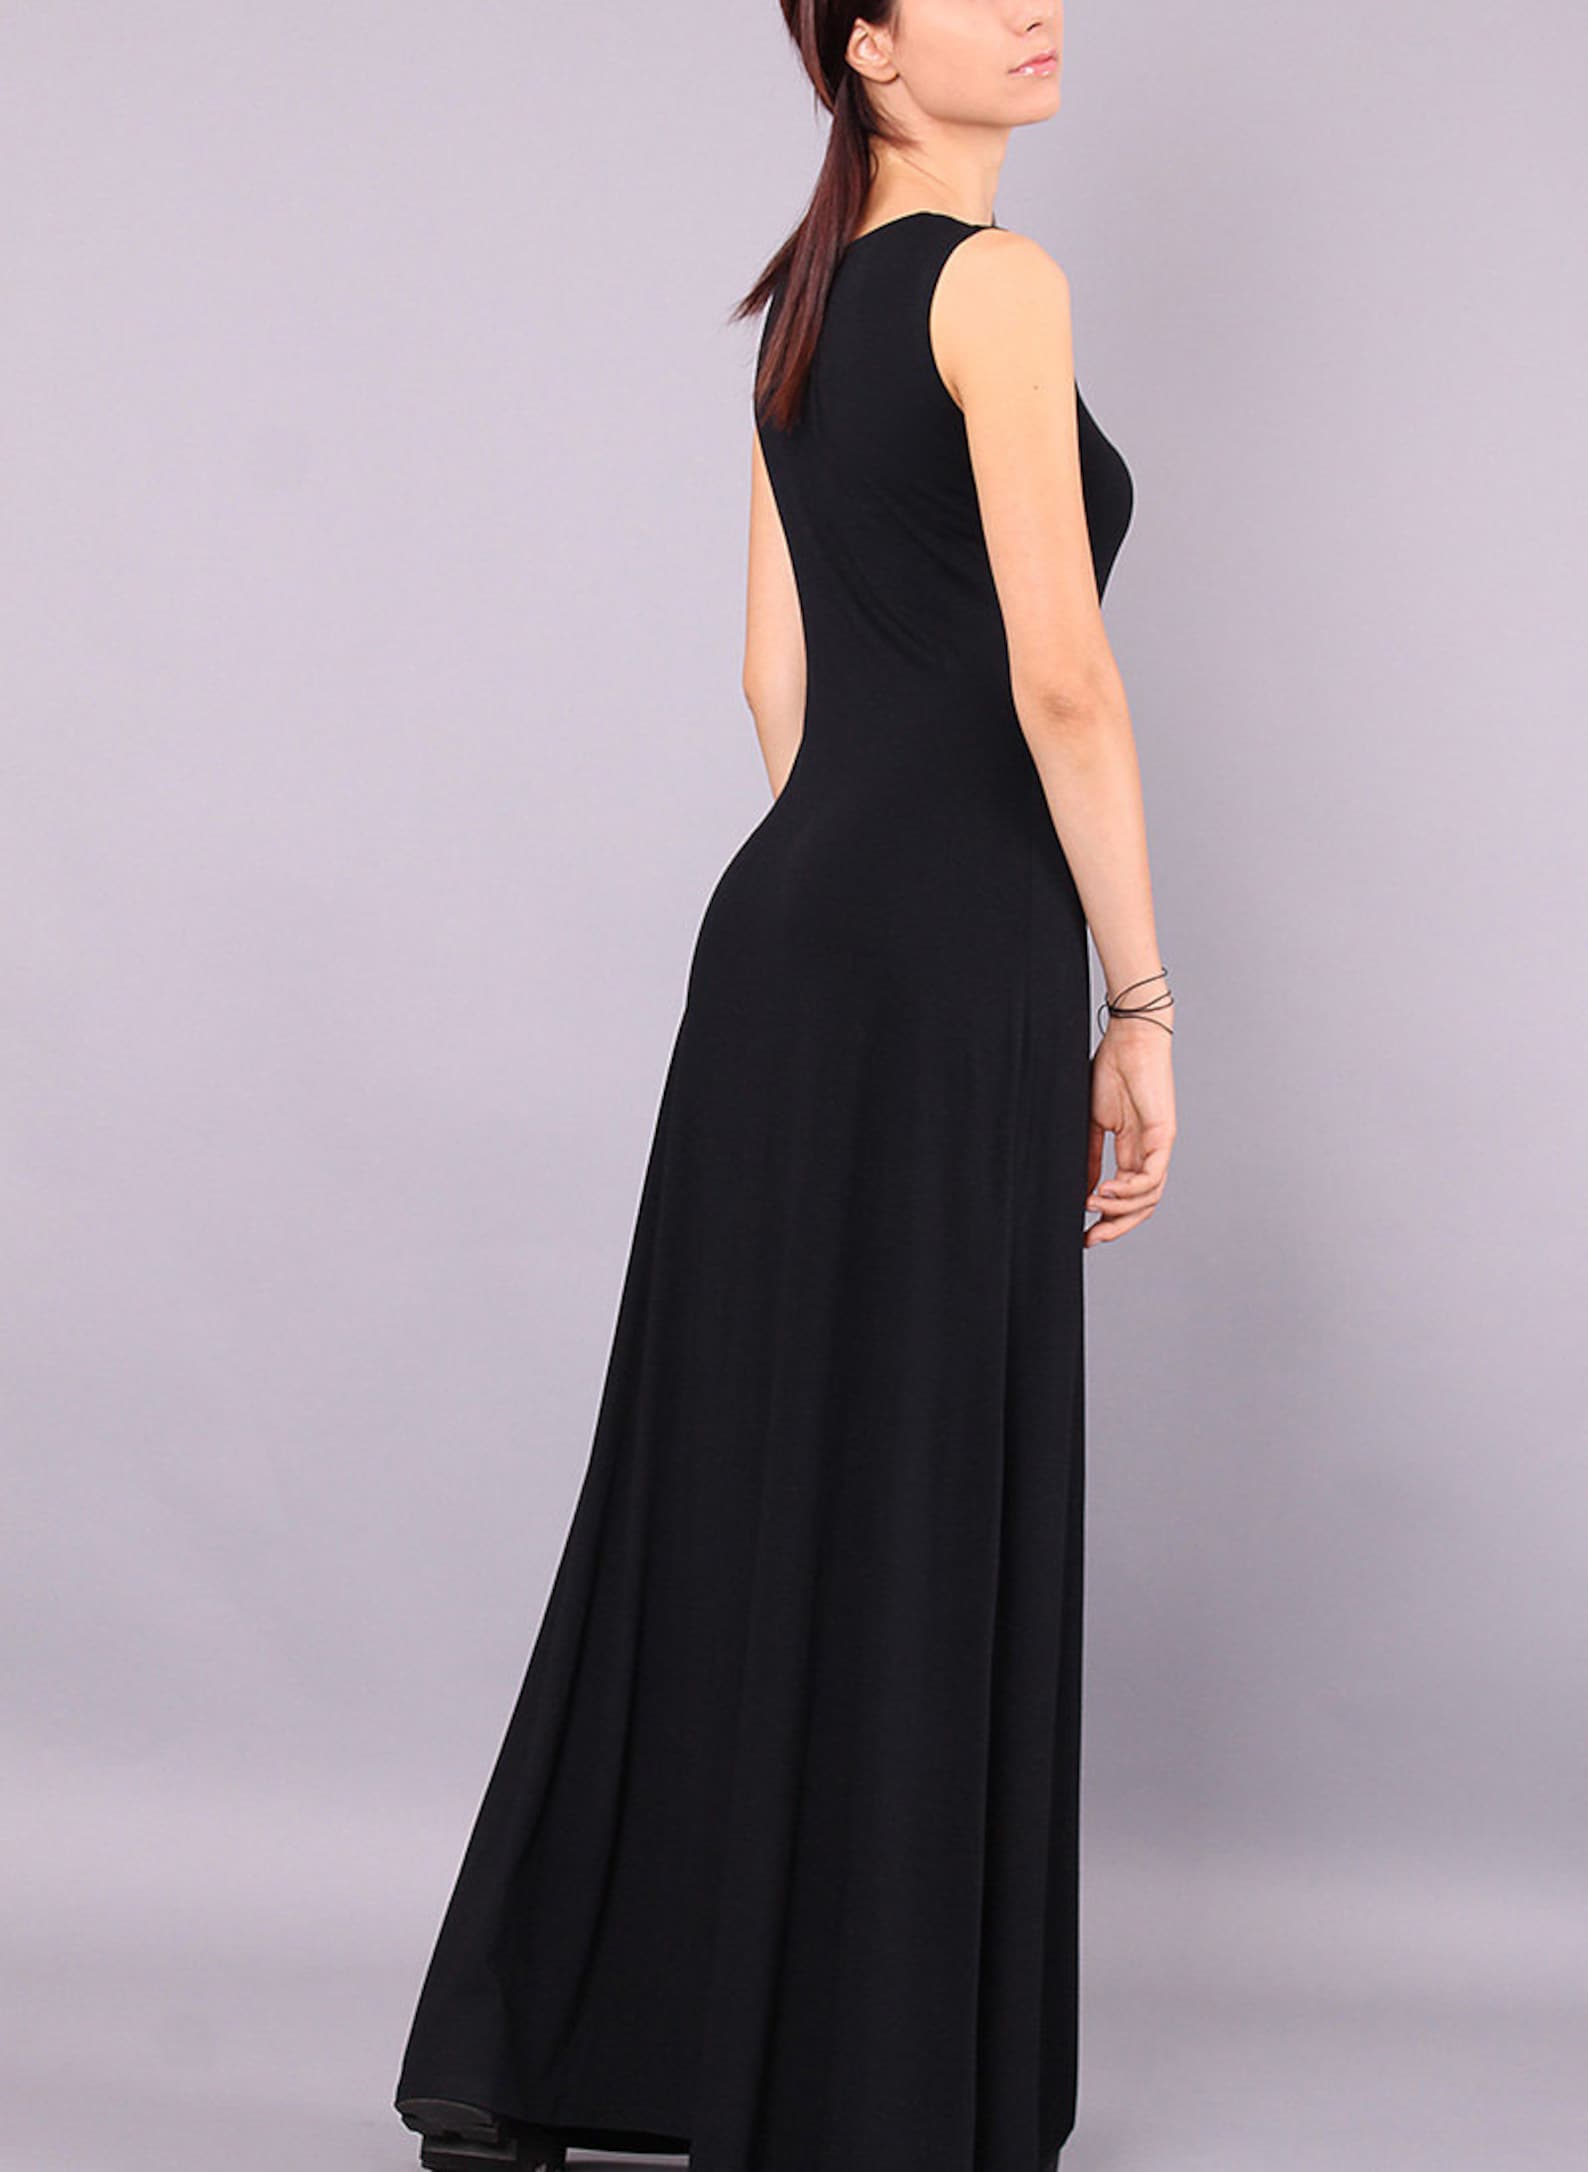 Maxi Dress Black Dress Long Dress Party Dress Floor Length - Etsy